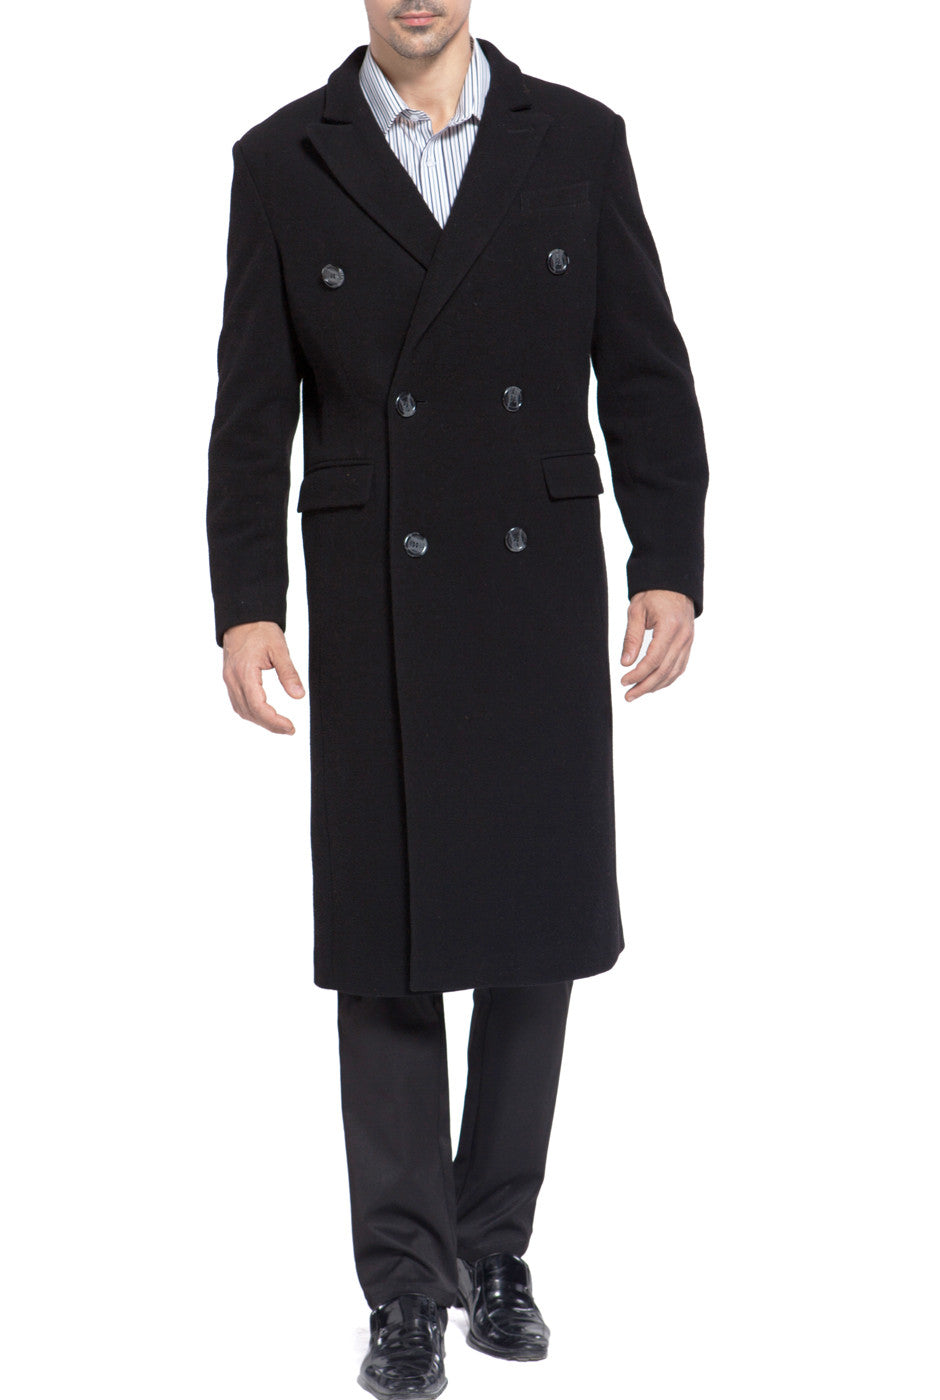 BGSD Men Josh Cashmere & Wool Blend Double Breasted Long Coat